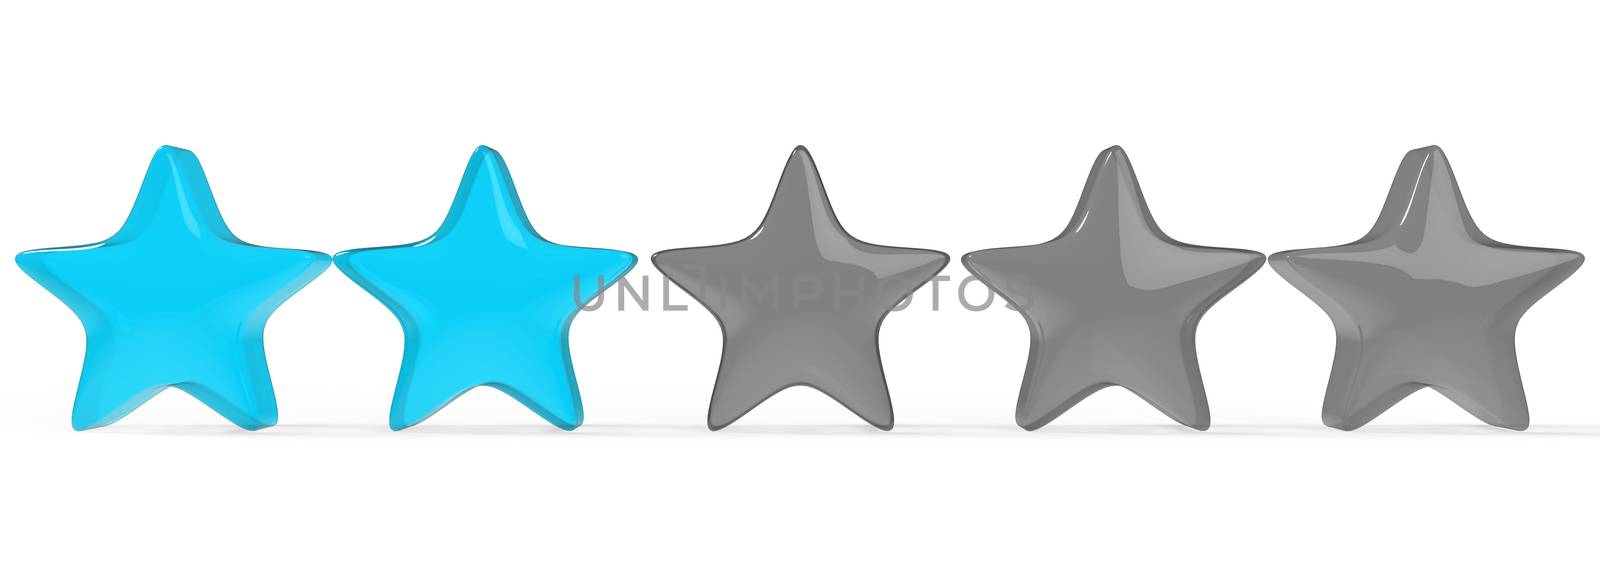 3d two azure star on color background. Render and illustration of golden star for premium